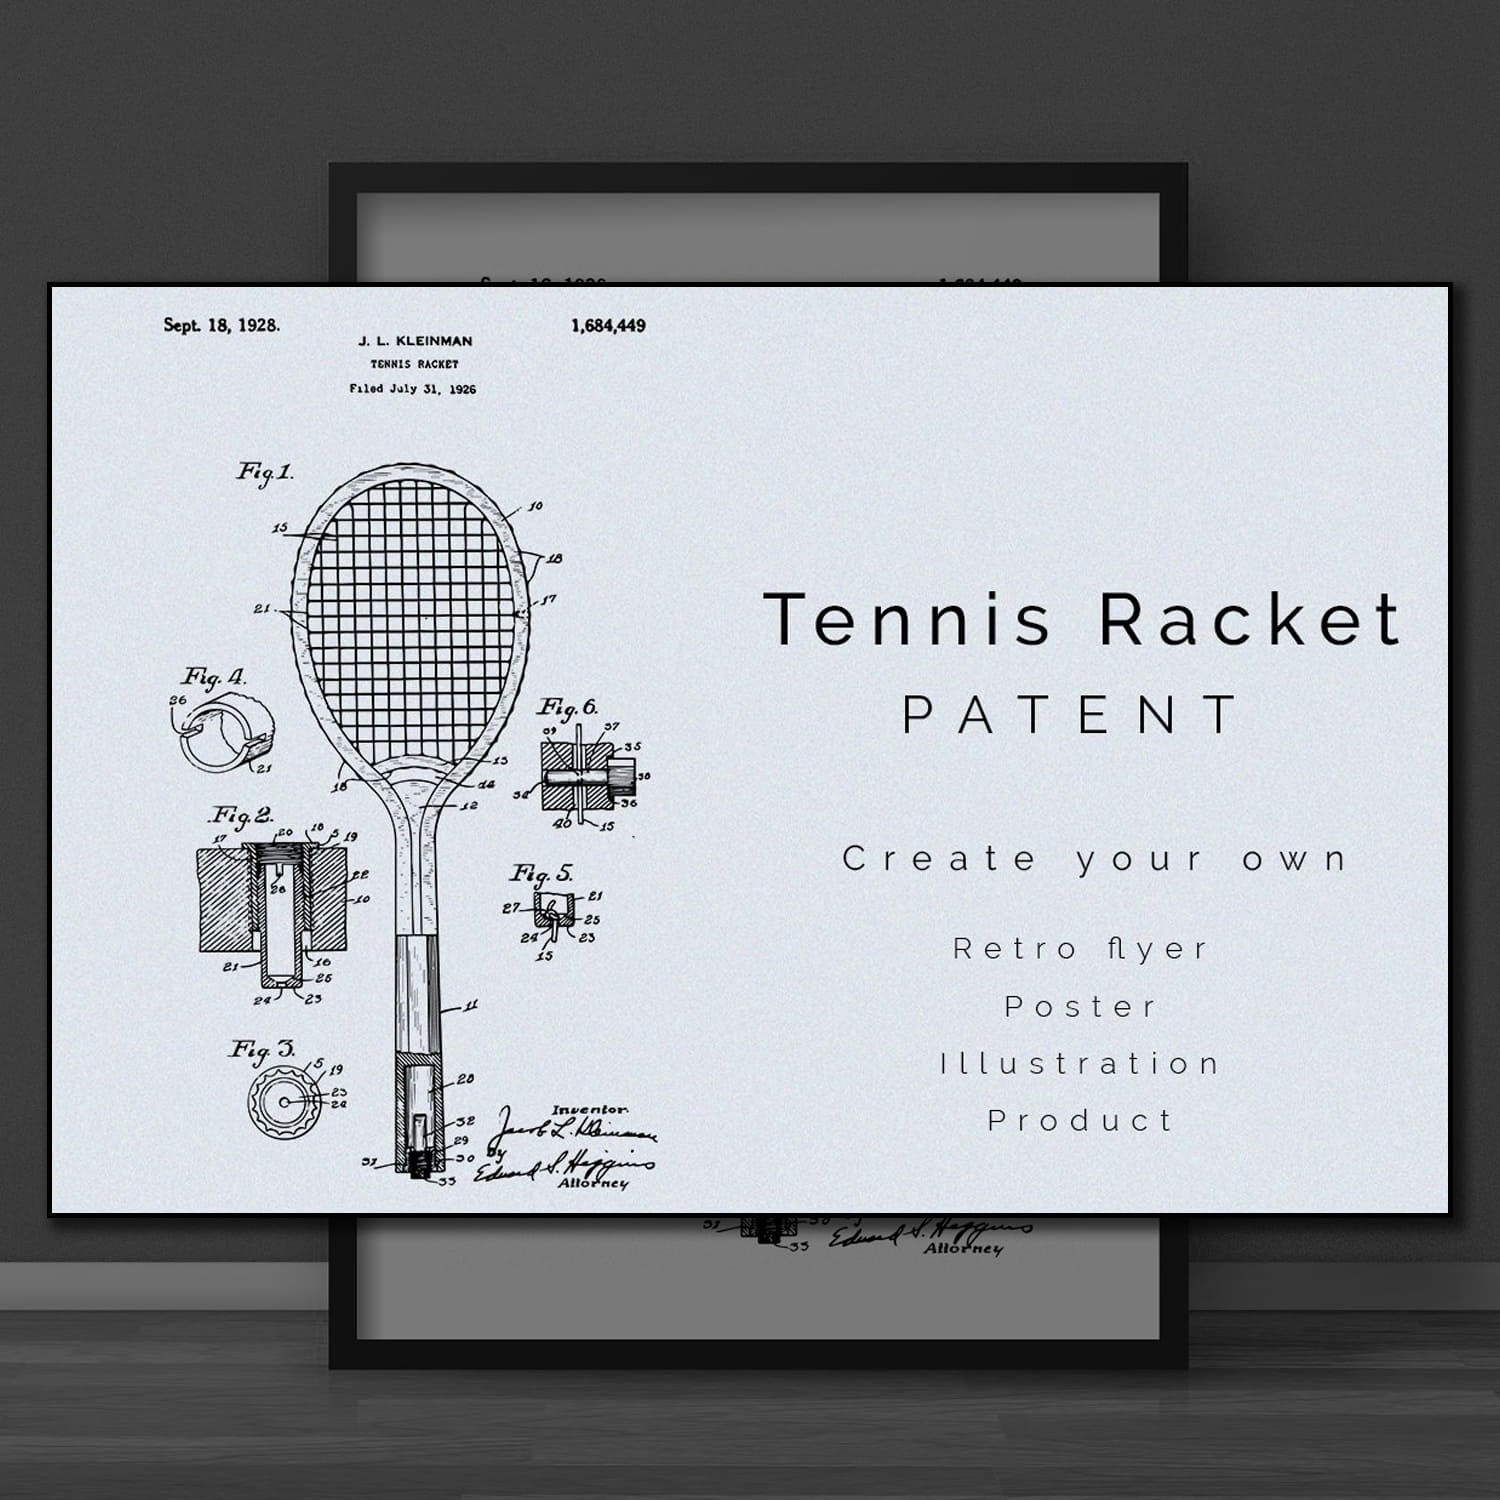 Tennis Racket Patent.